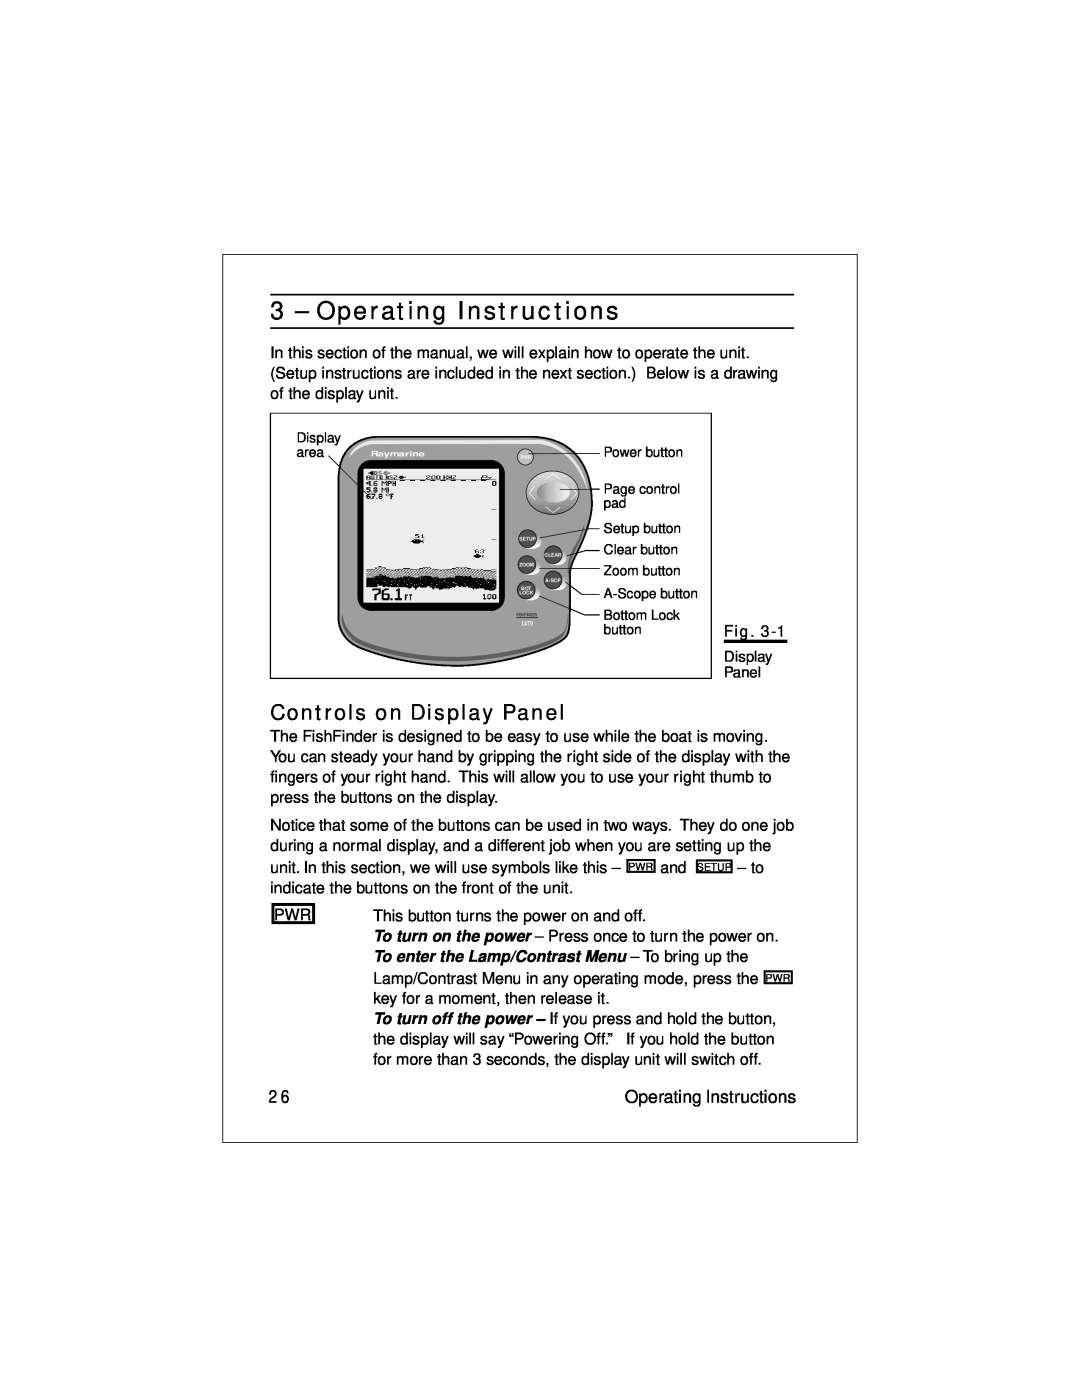 Raymarine L470 instruction manual Operating Instructions, Controls on Display Panel 